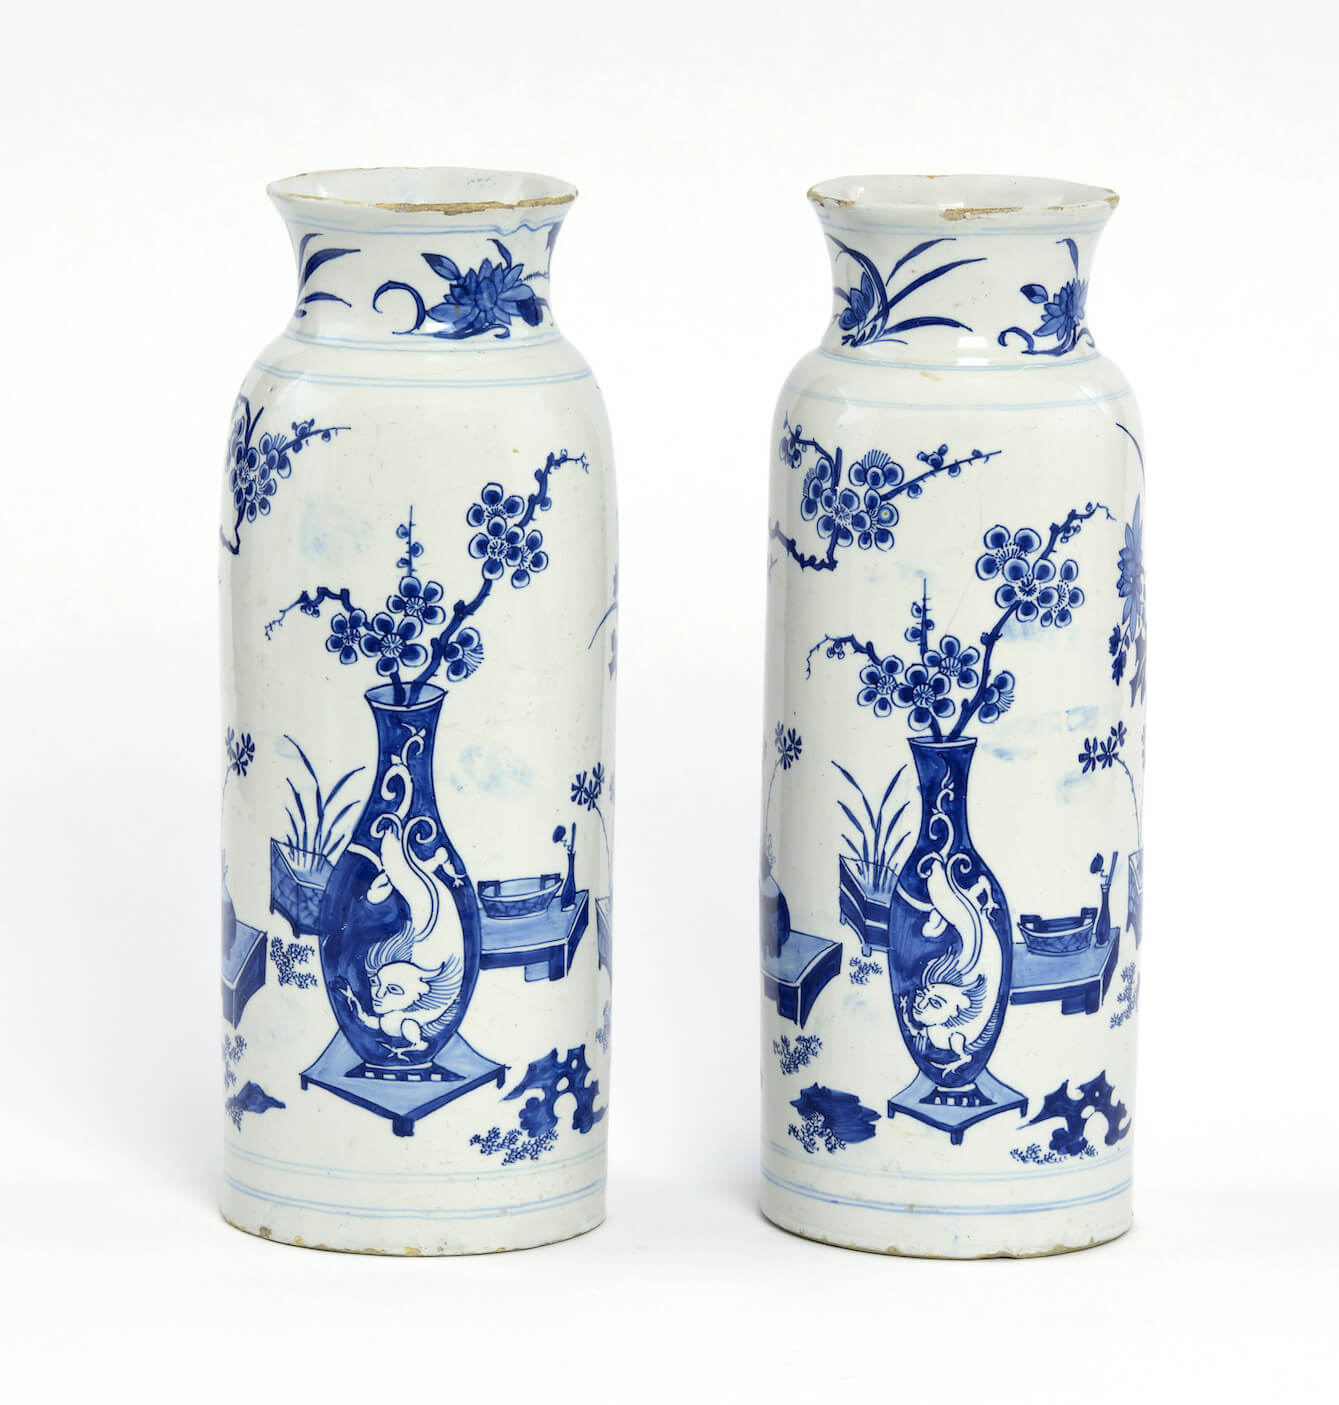 Delftware Rouleau vases at Aronson Antiquairs